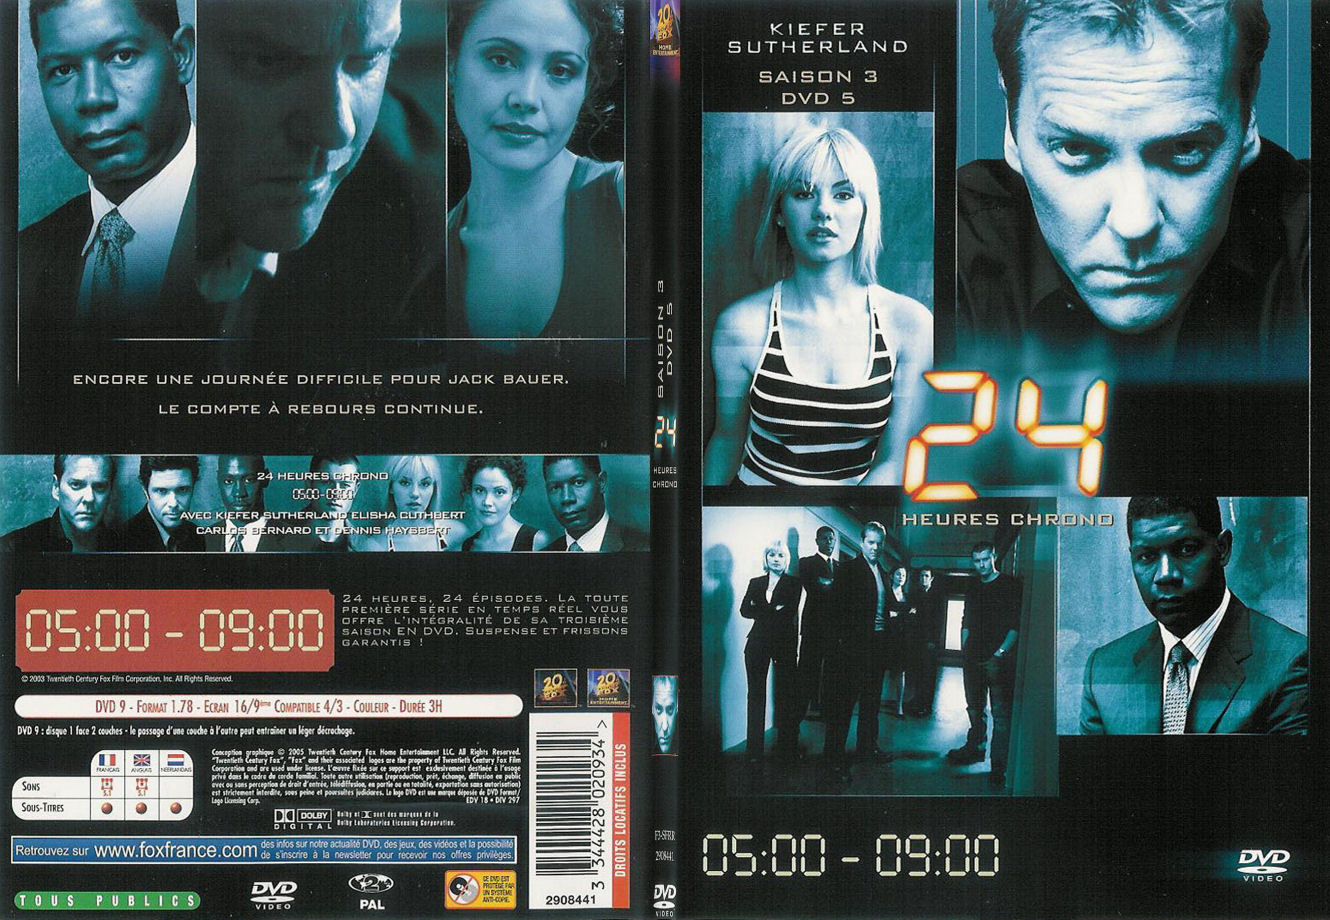 Jaquette DVD 24 heures chrono Saison 3 dvd 5 - SLIM